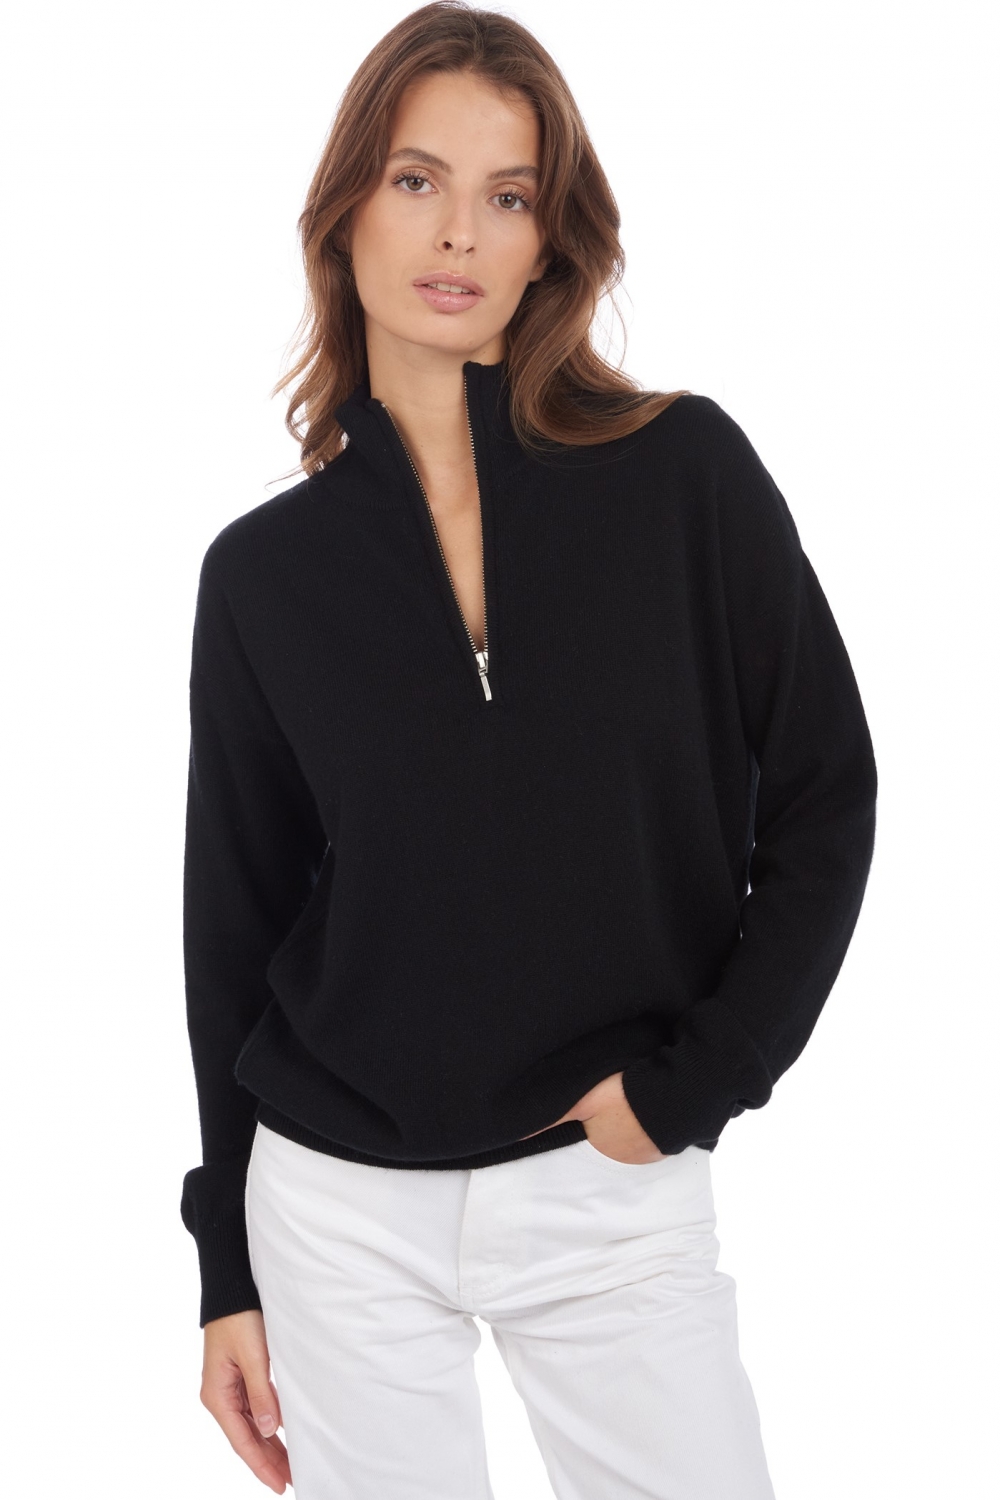 Cashmere ladies our full range of women s sweaters groseille black 2xl